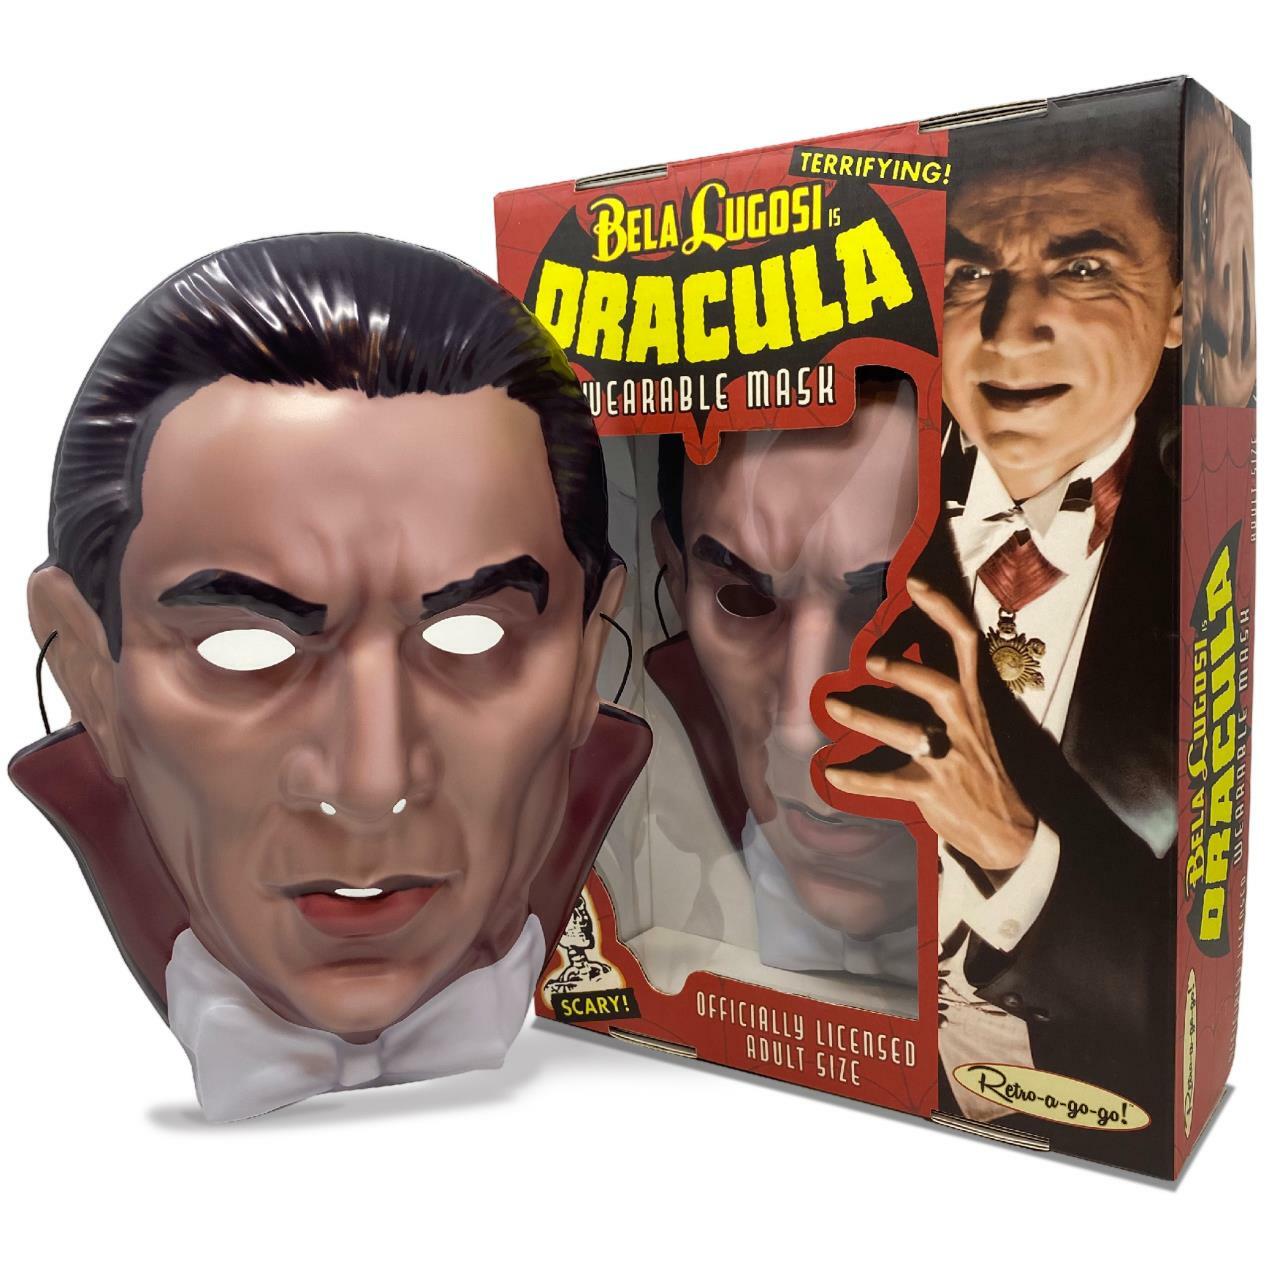 Bela Lugosi is Dracula Wearable Mask Crypt Color WEABLDRCO image1 27205.1639683936.1280.1280